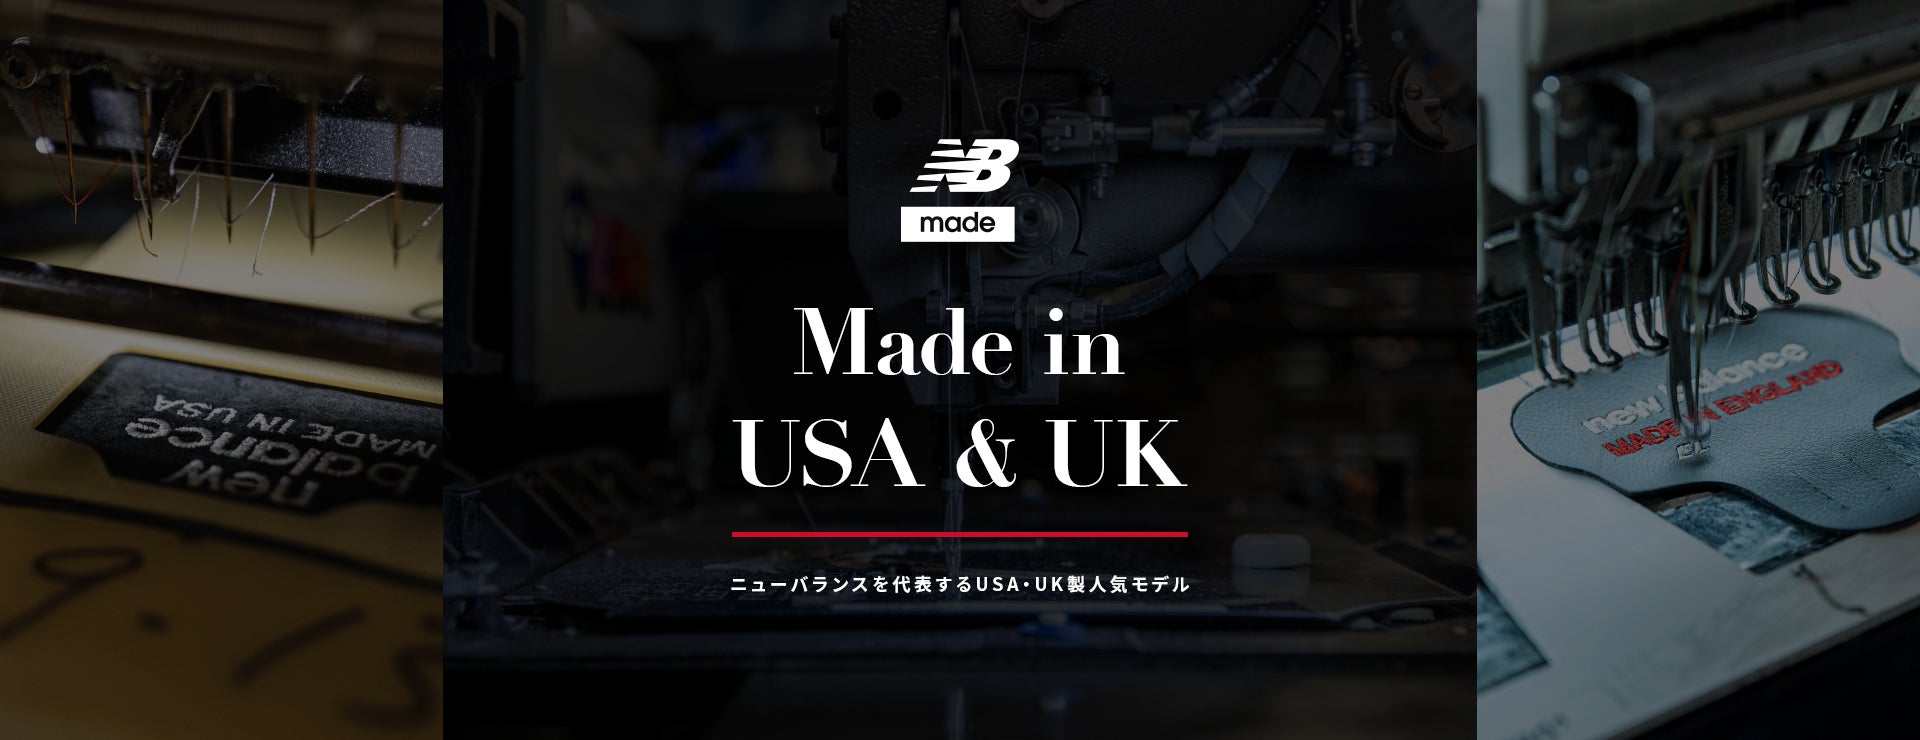 NB made. Made in USA & UK. ニューバランスを代表する、クラフトマンシップ溢れるUSA・UK製人気モデル